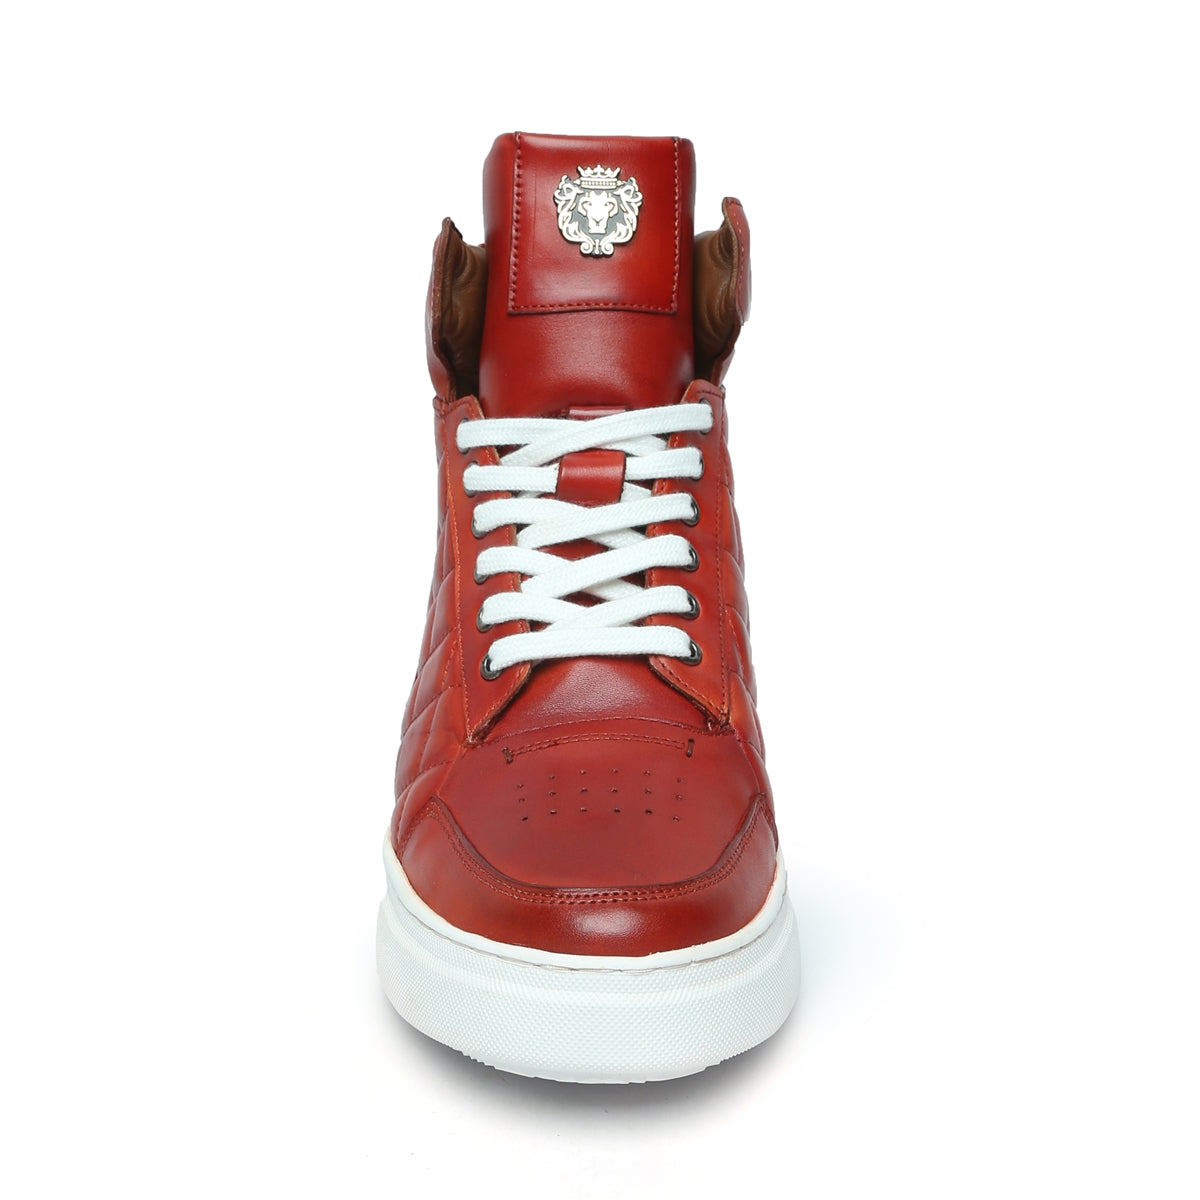 Buy Women Red Sports Sneakers Online | SKU: 36-9260-18-36-Metro Shoes